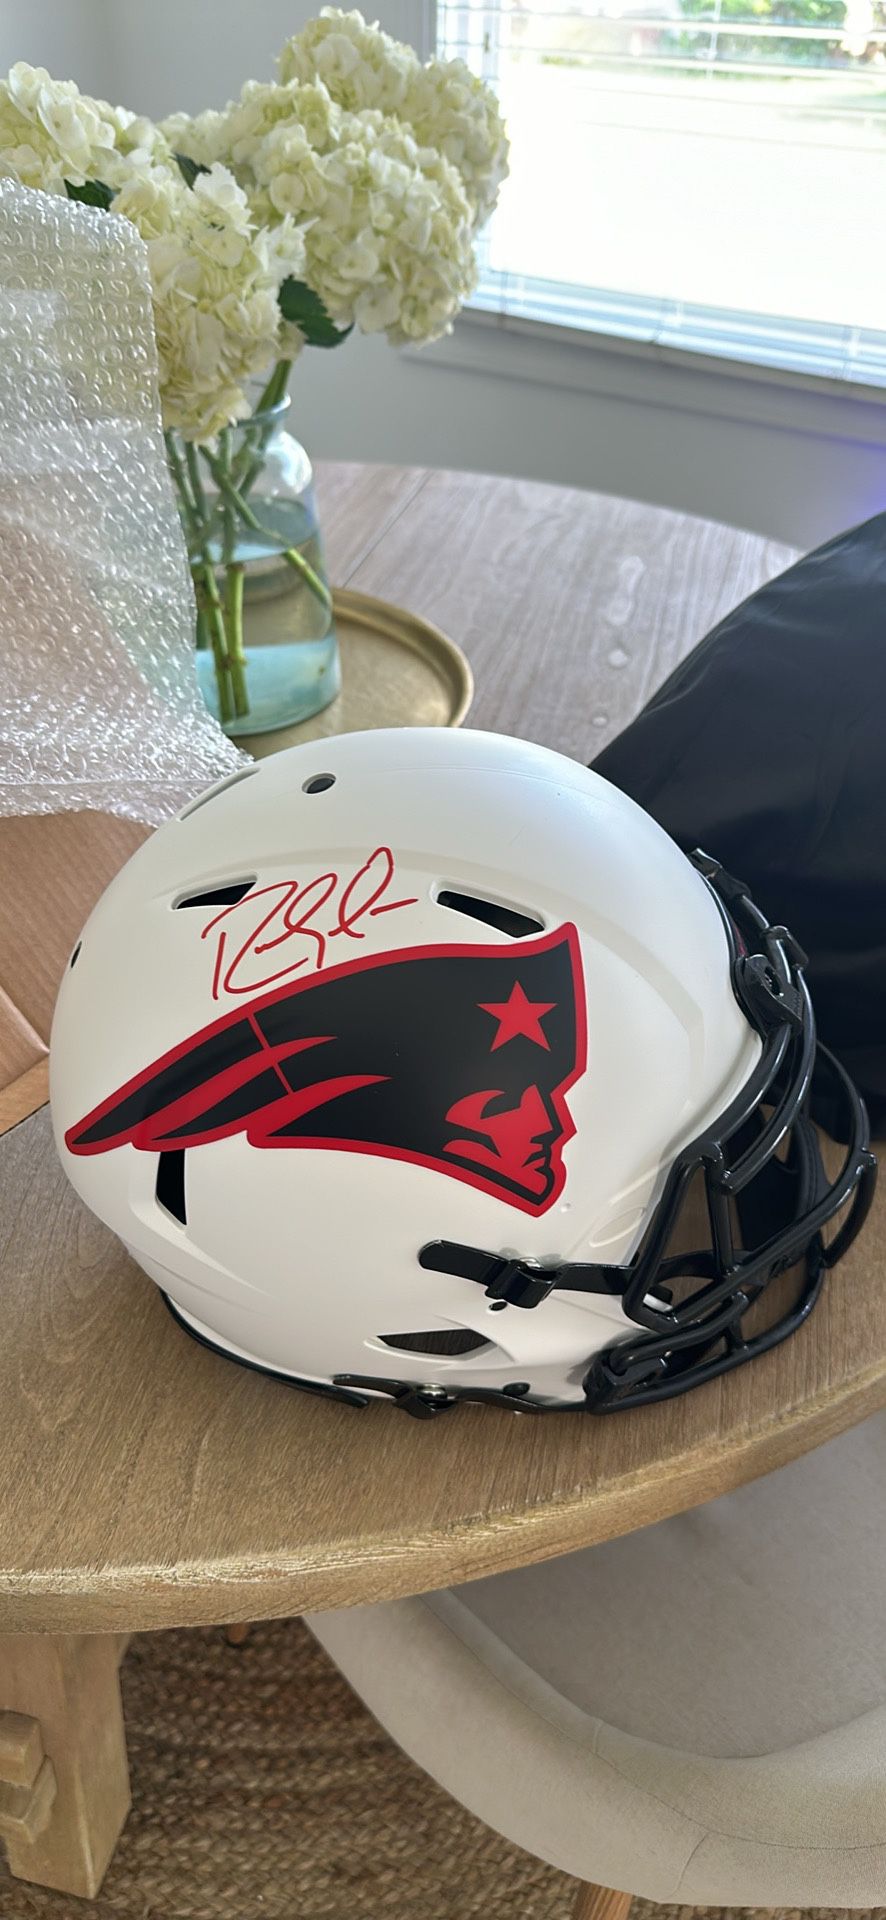 Randy Moss Autographed Helmet 